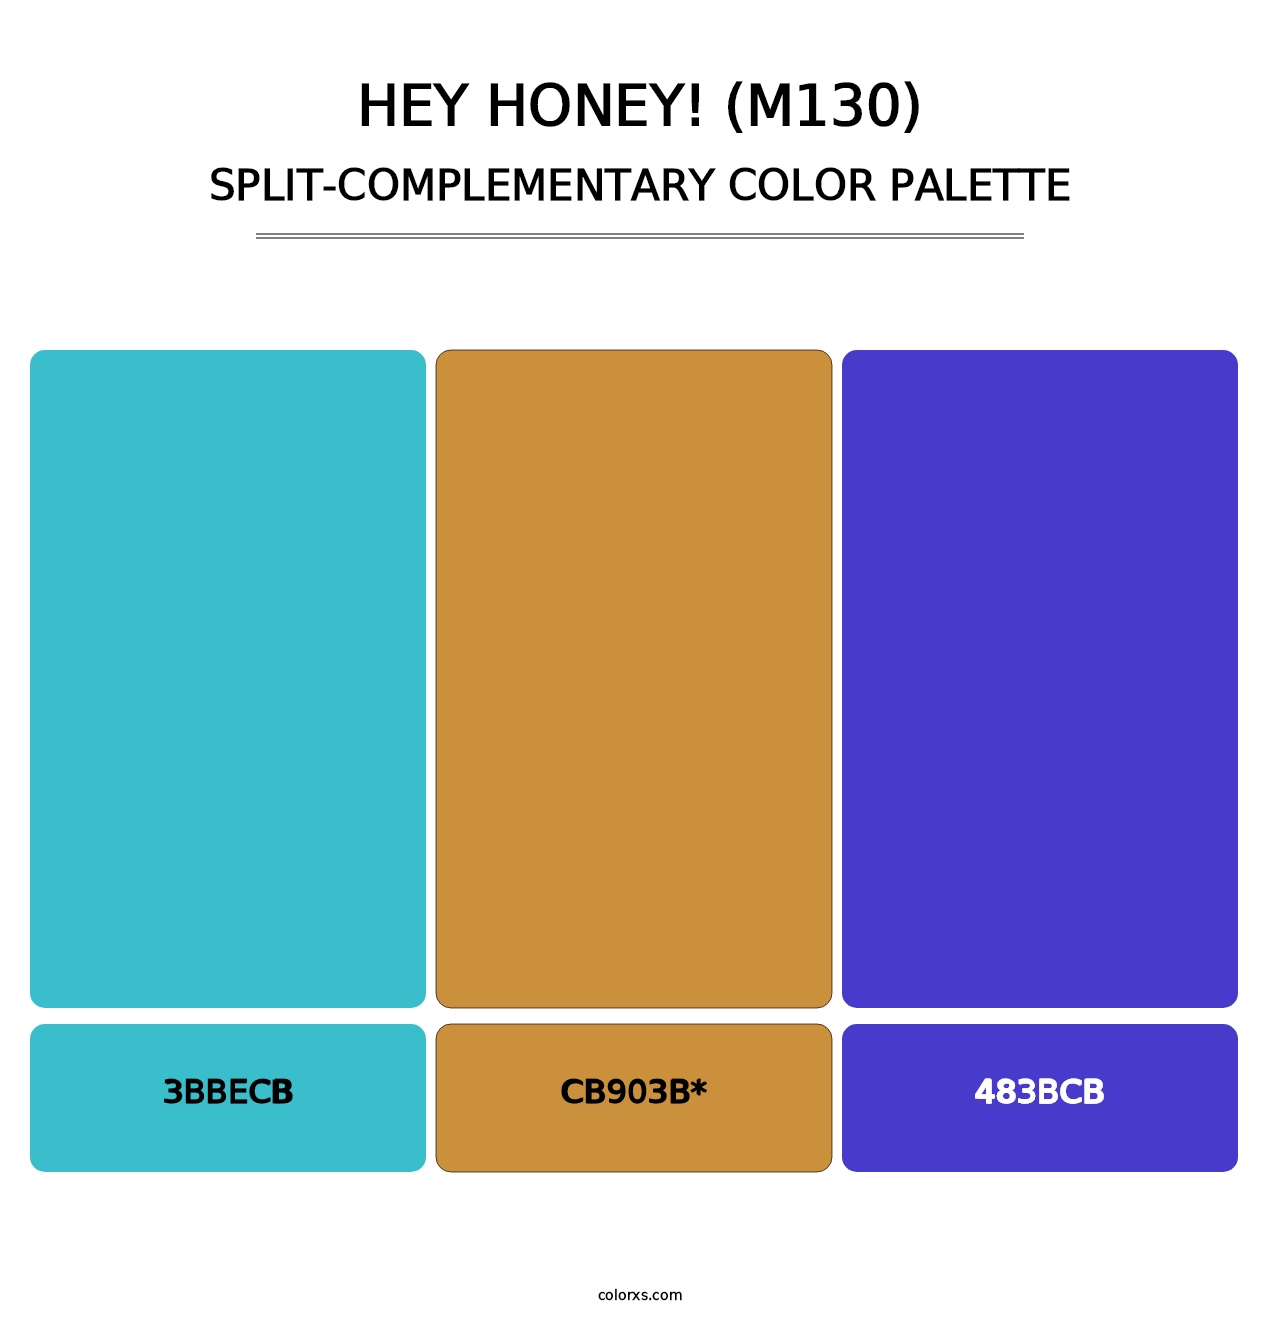 Hey Honey! (M130) - Split-Complementary Color Palette